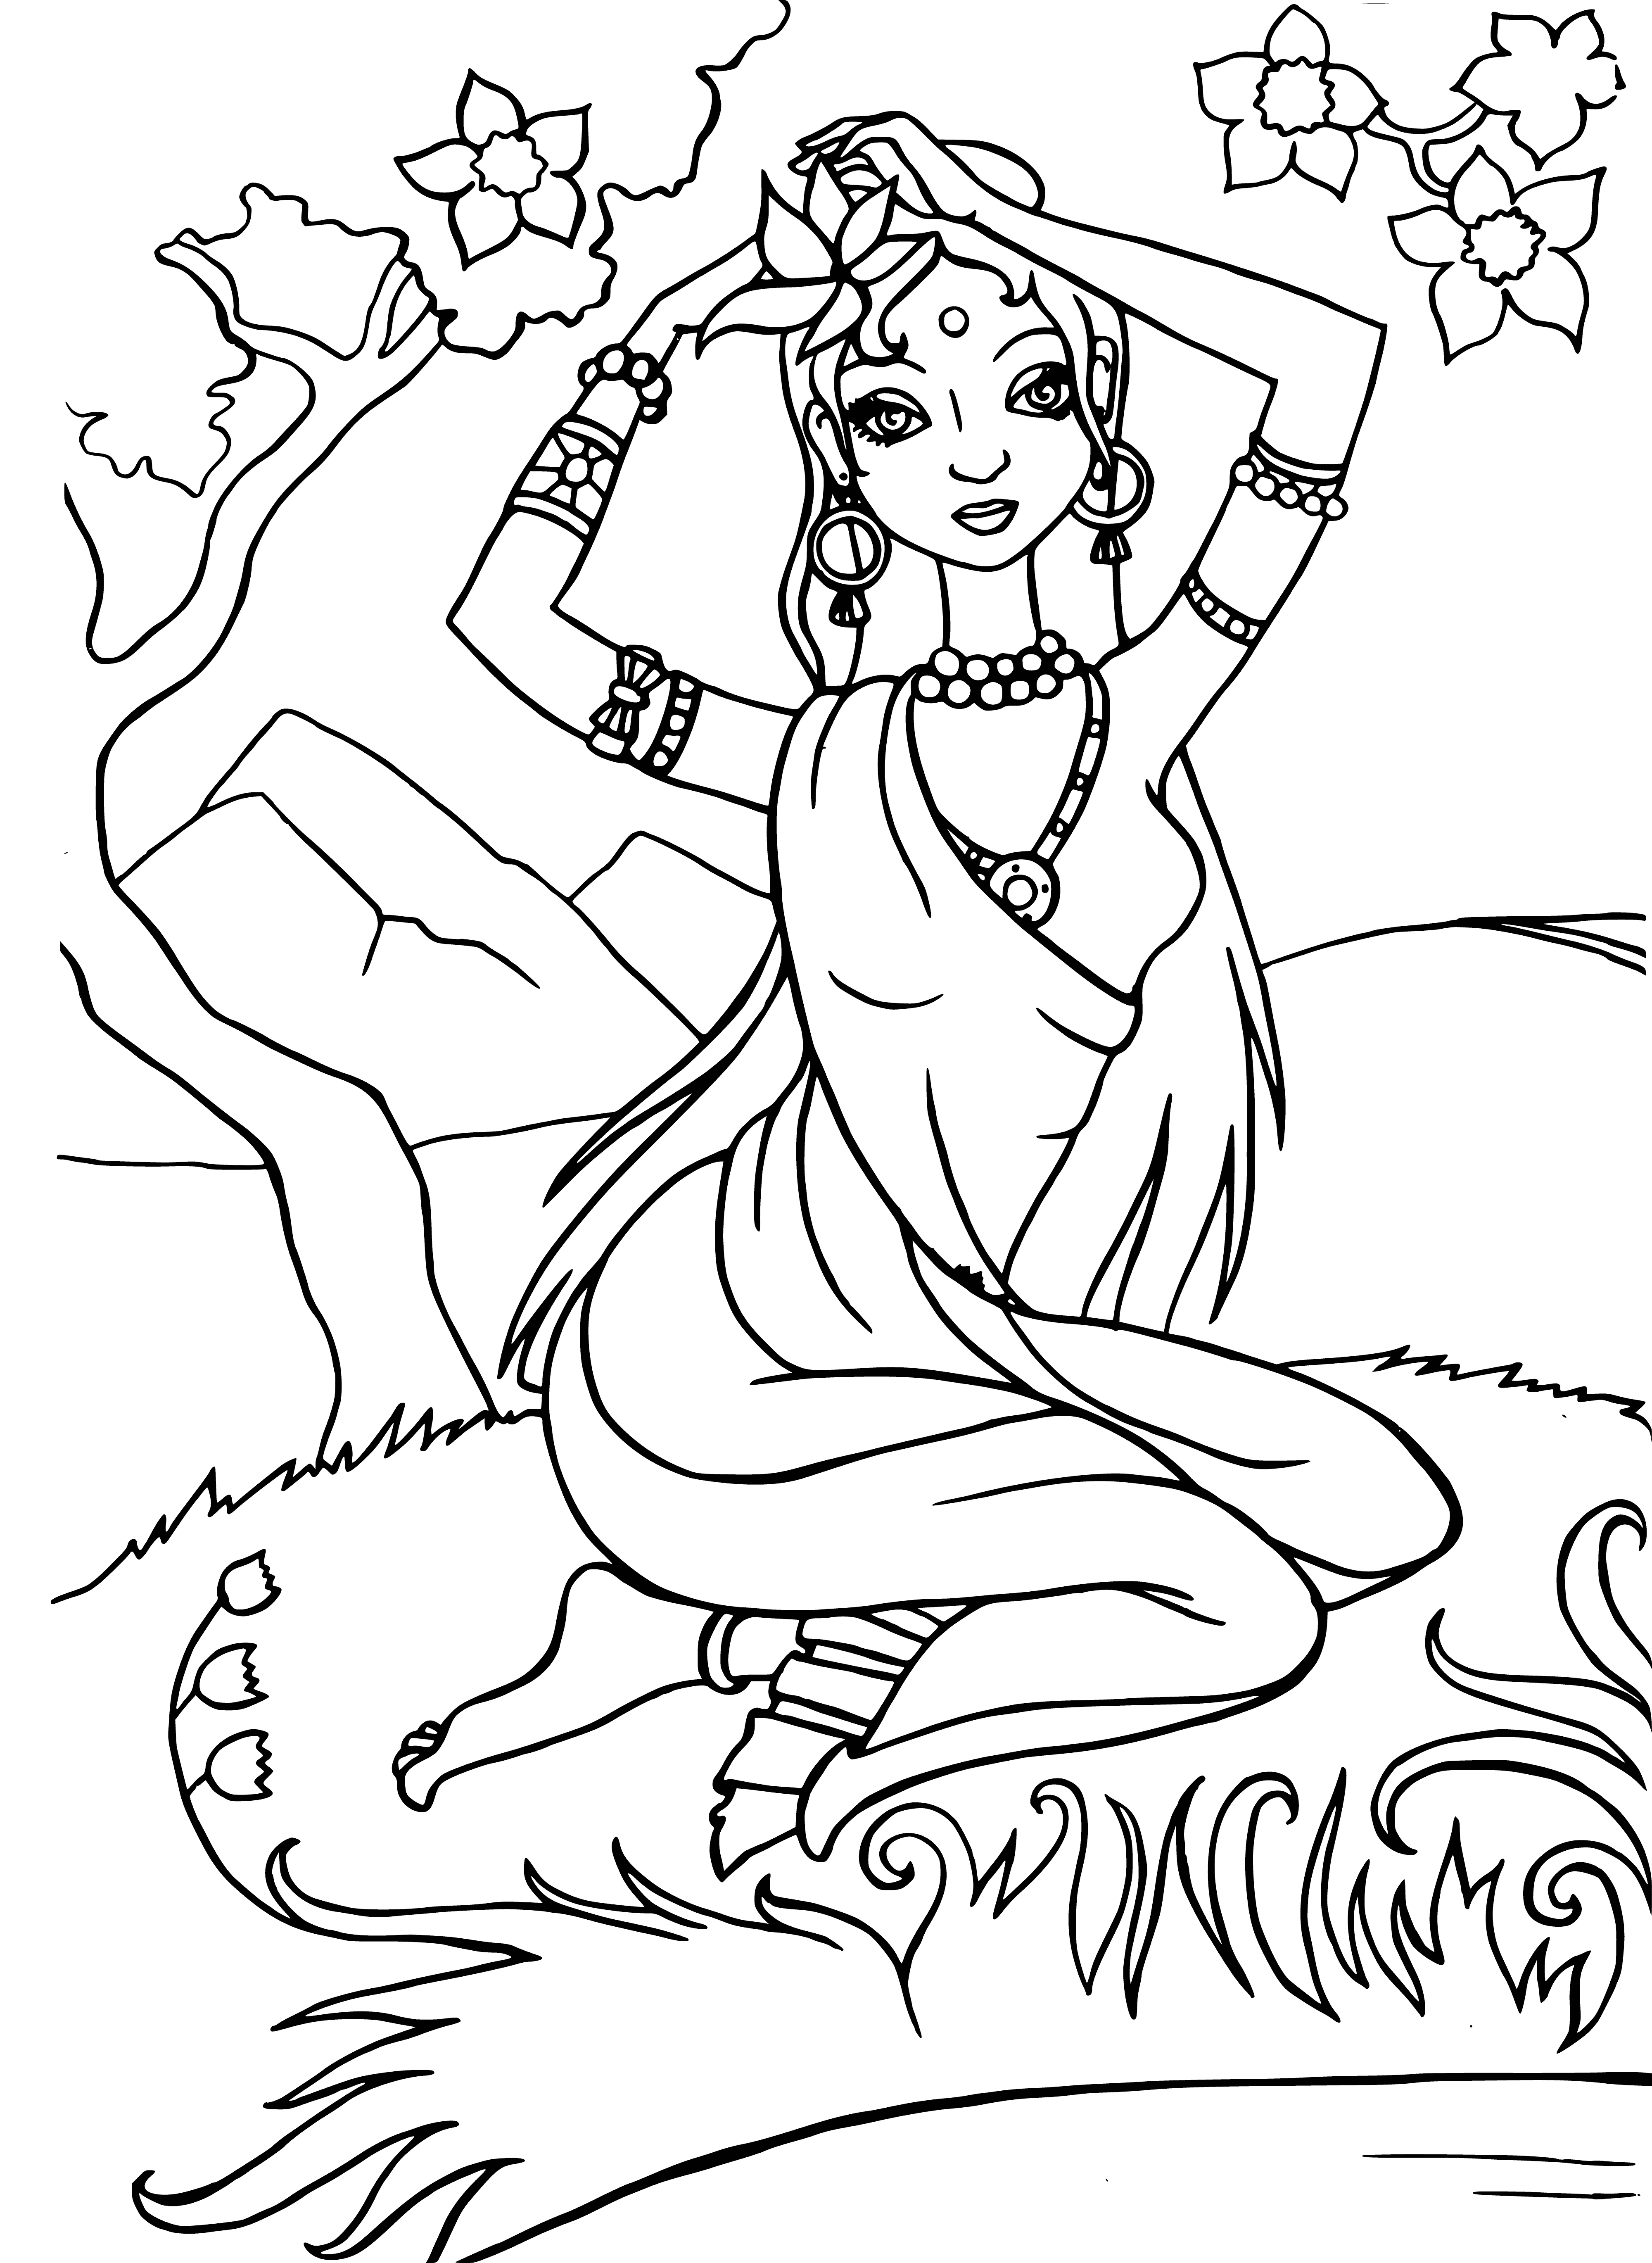 Indian princess coloring page